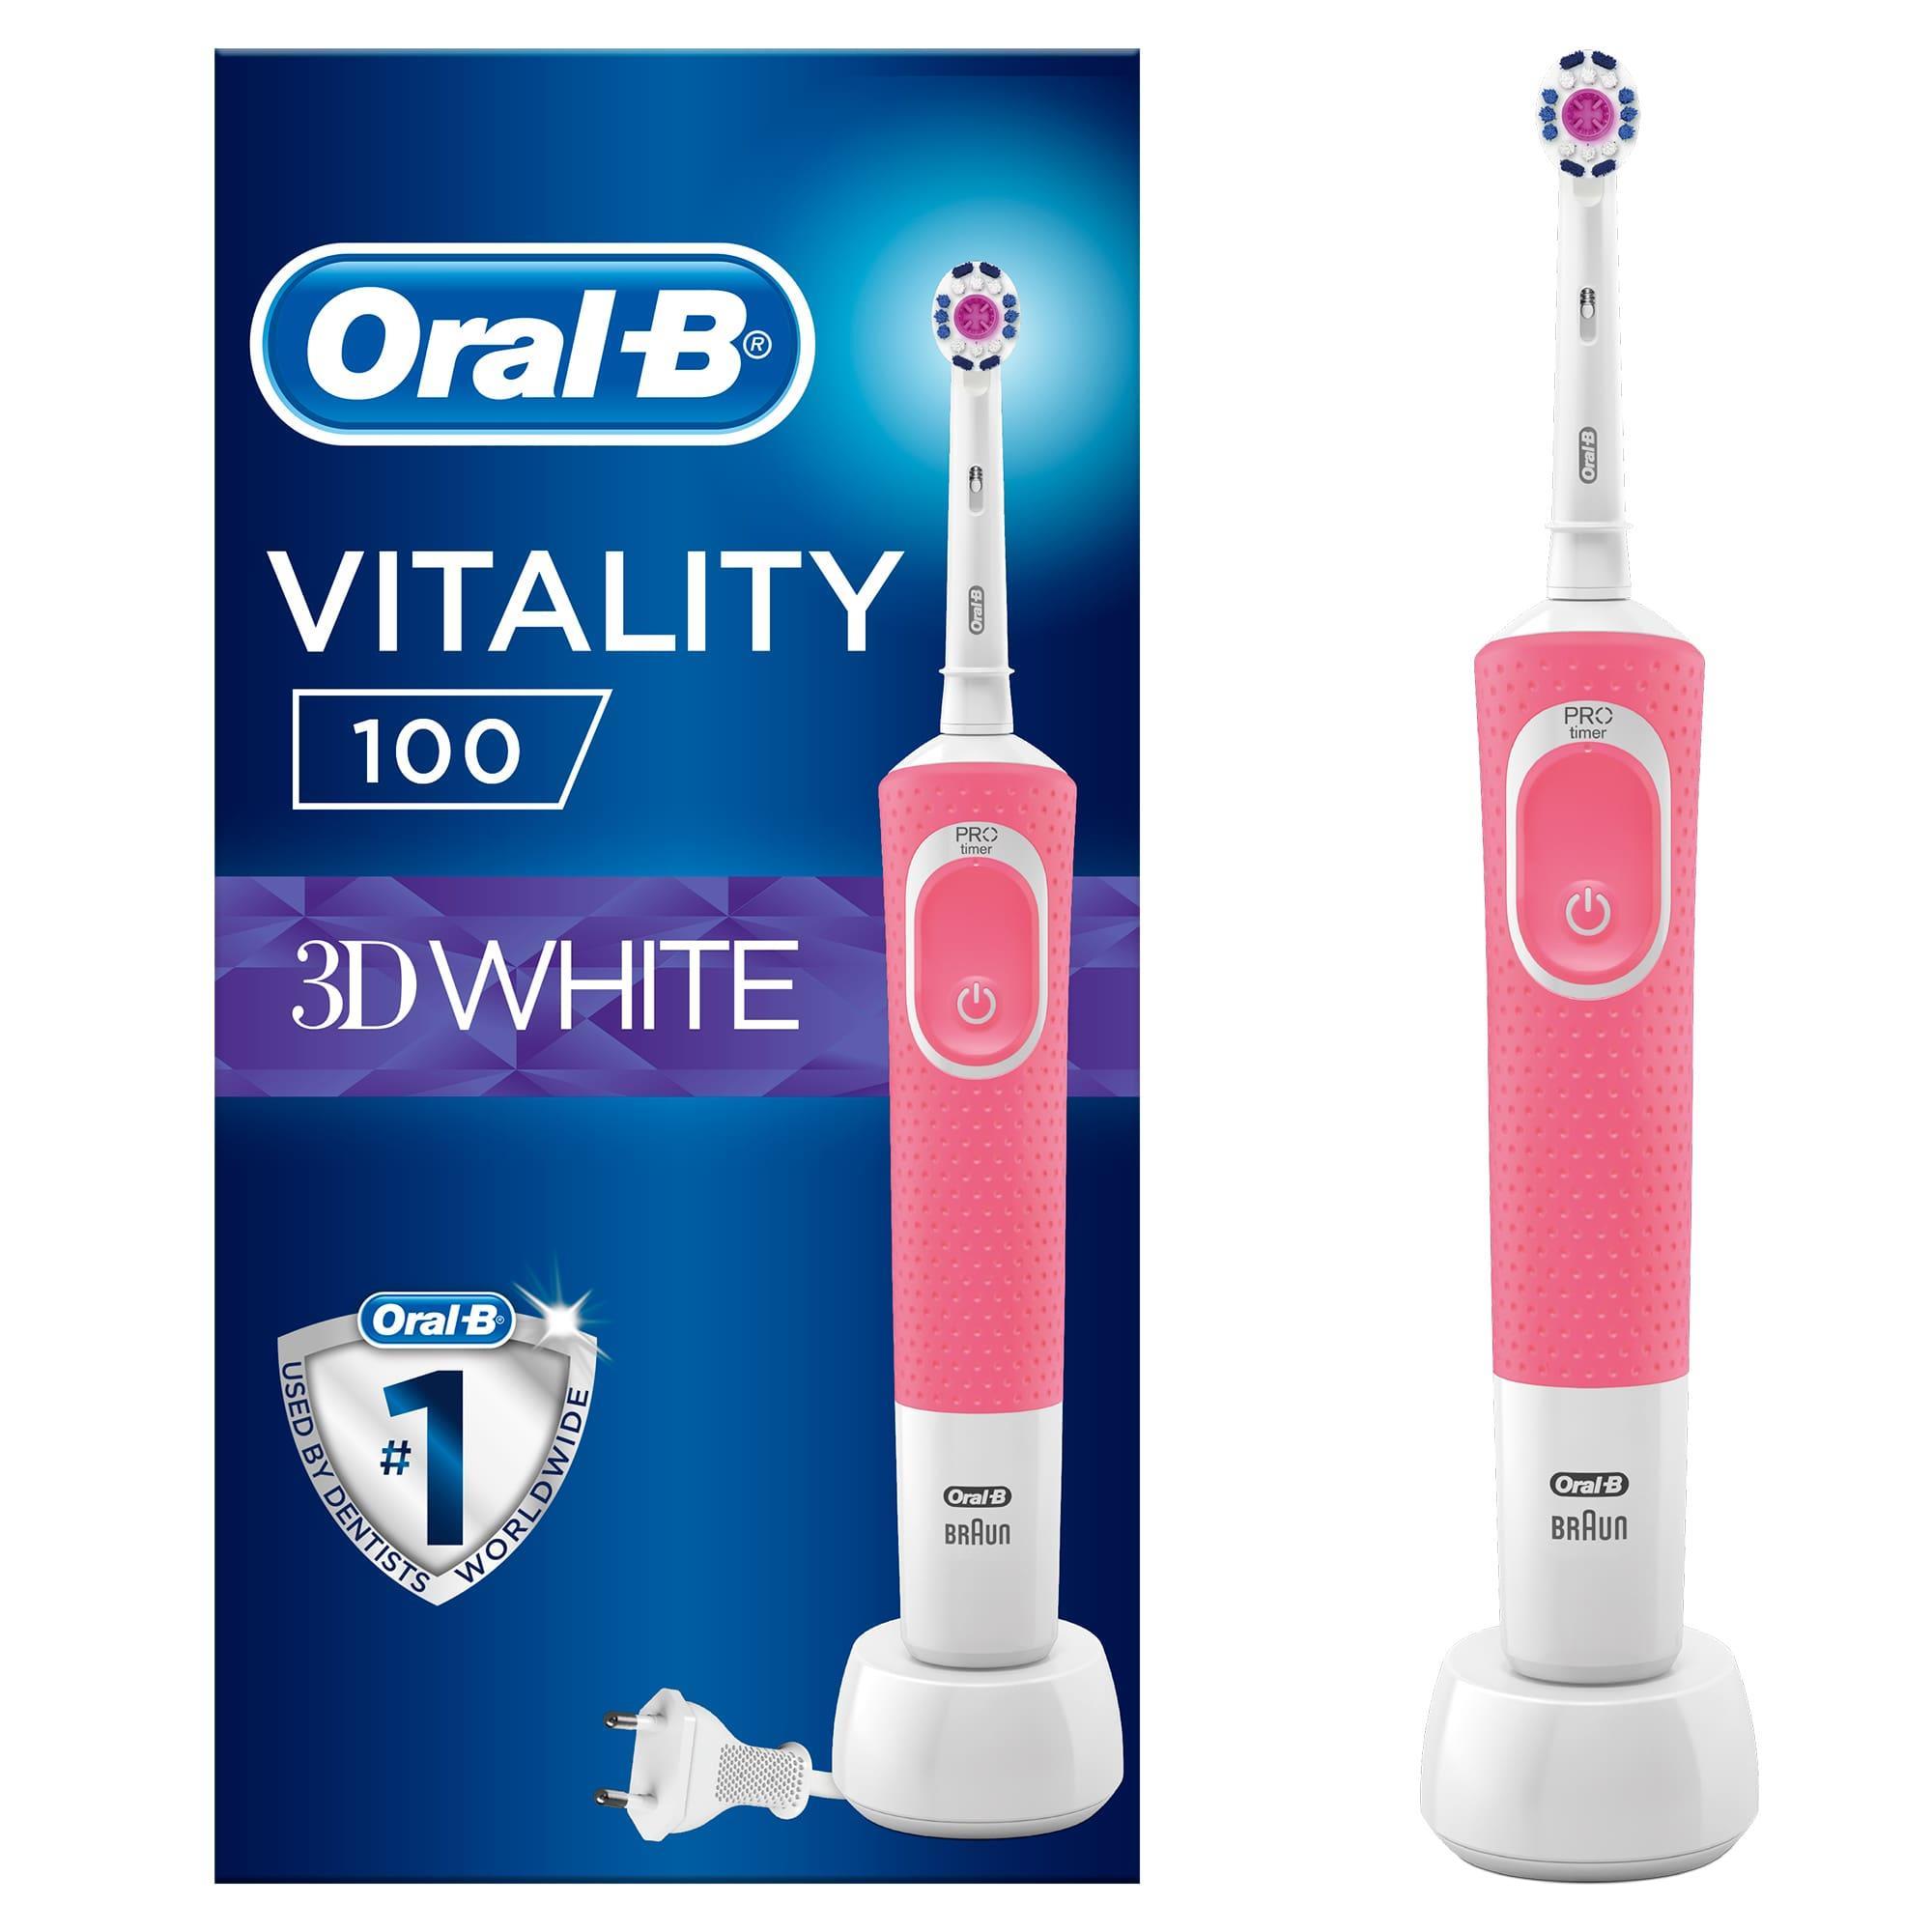 Oral-B - Oral-B D100 Vitality 3D White Şarjlı Diş Fırçası - Pembe